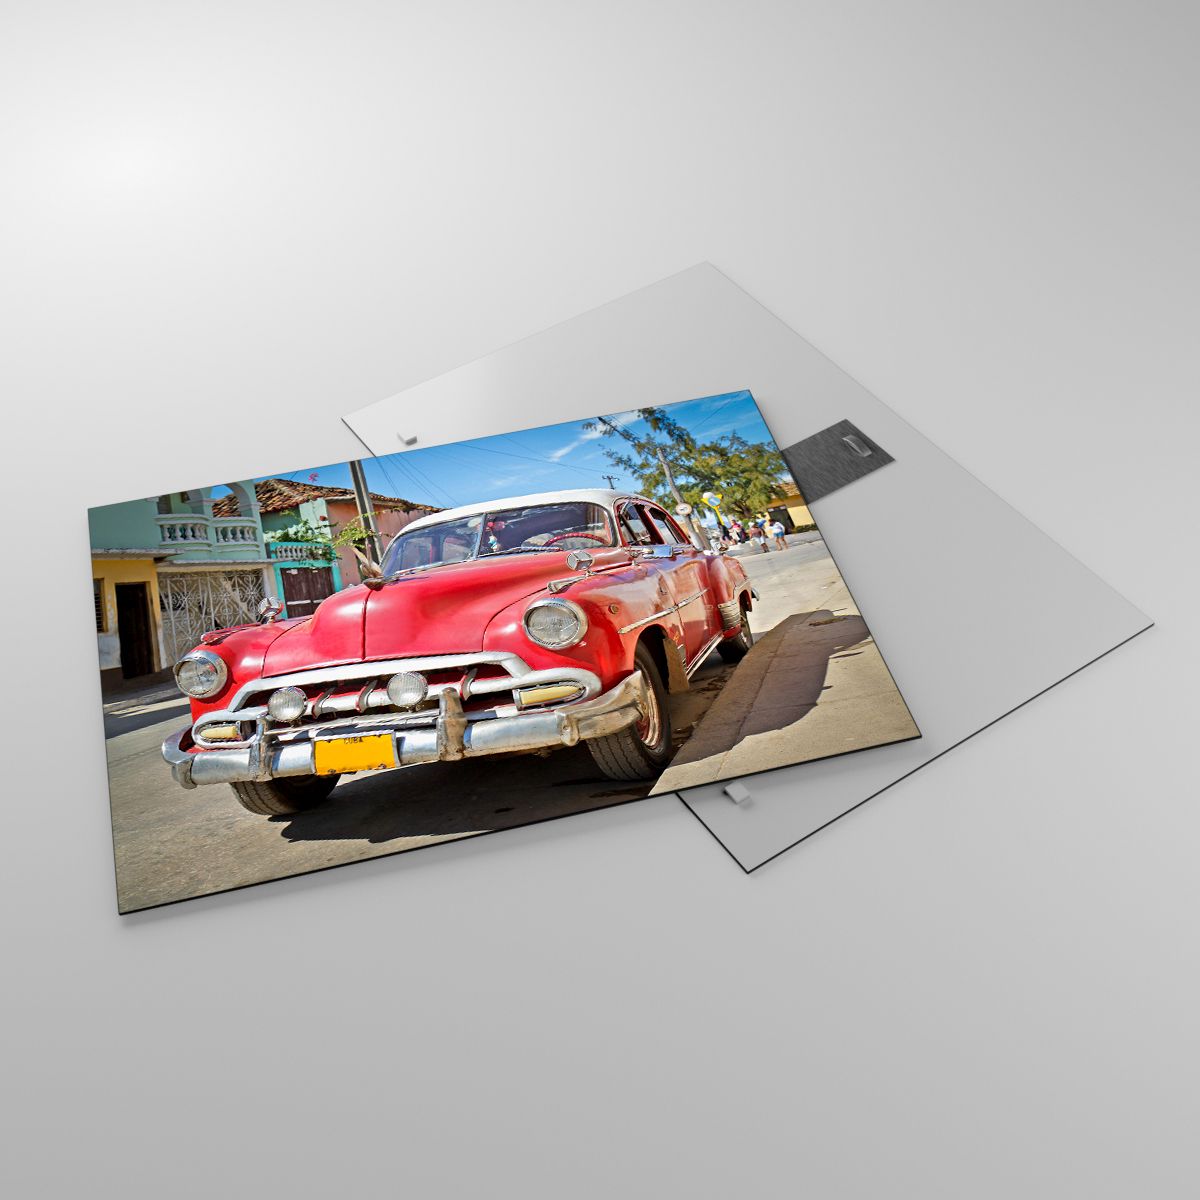 Glasbild Automobil, Glasbild Oldtimer, Glasbild Die Architektur, Glasbild Kuba, Glasbild Havanna